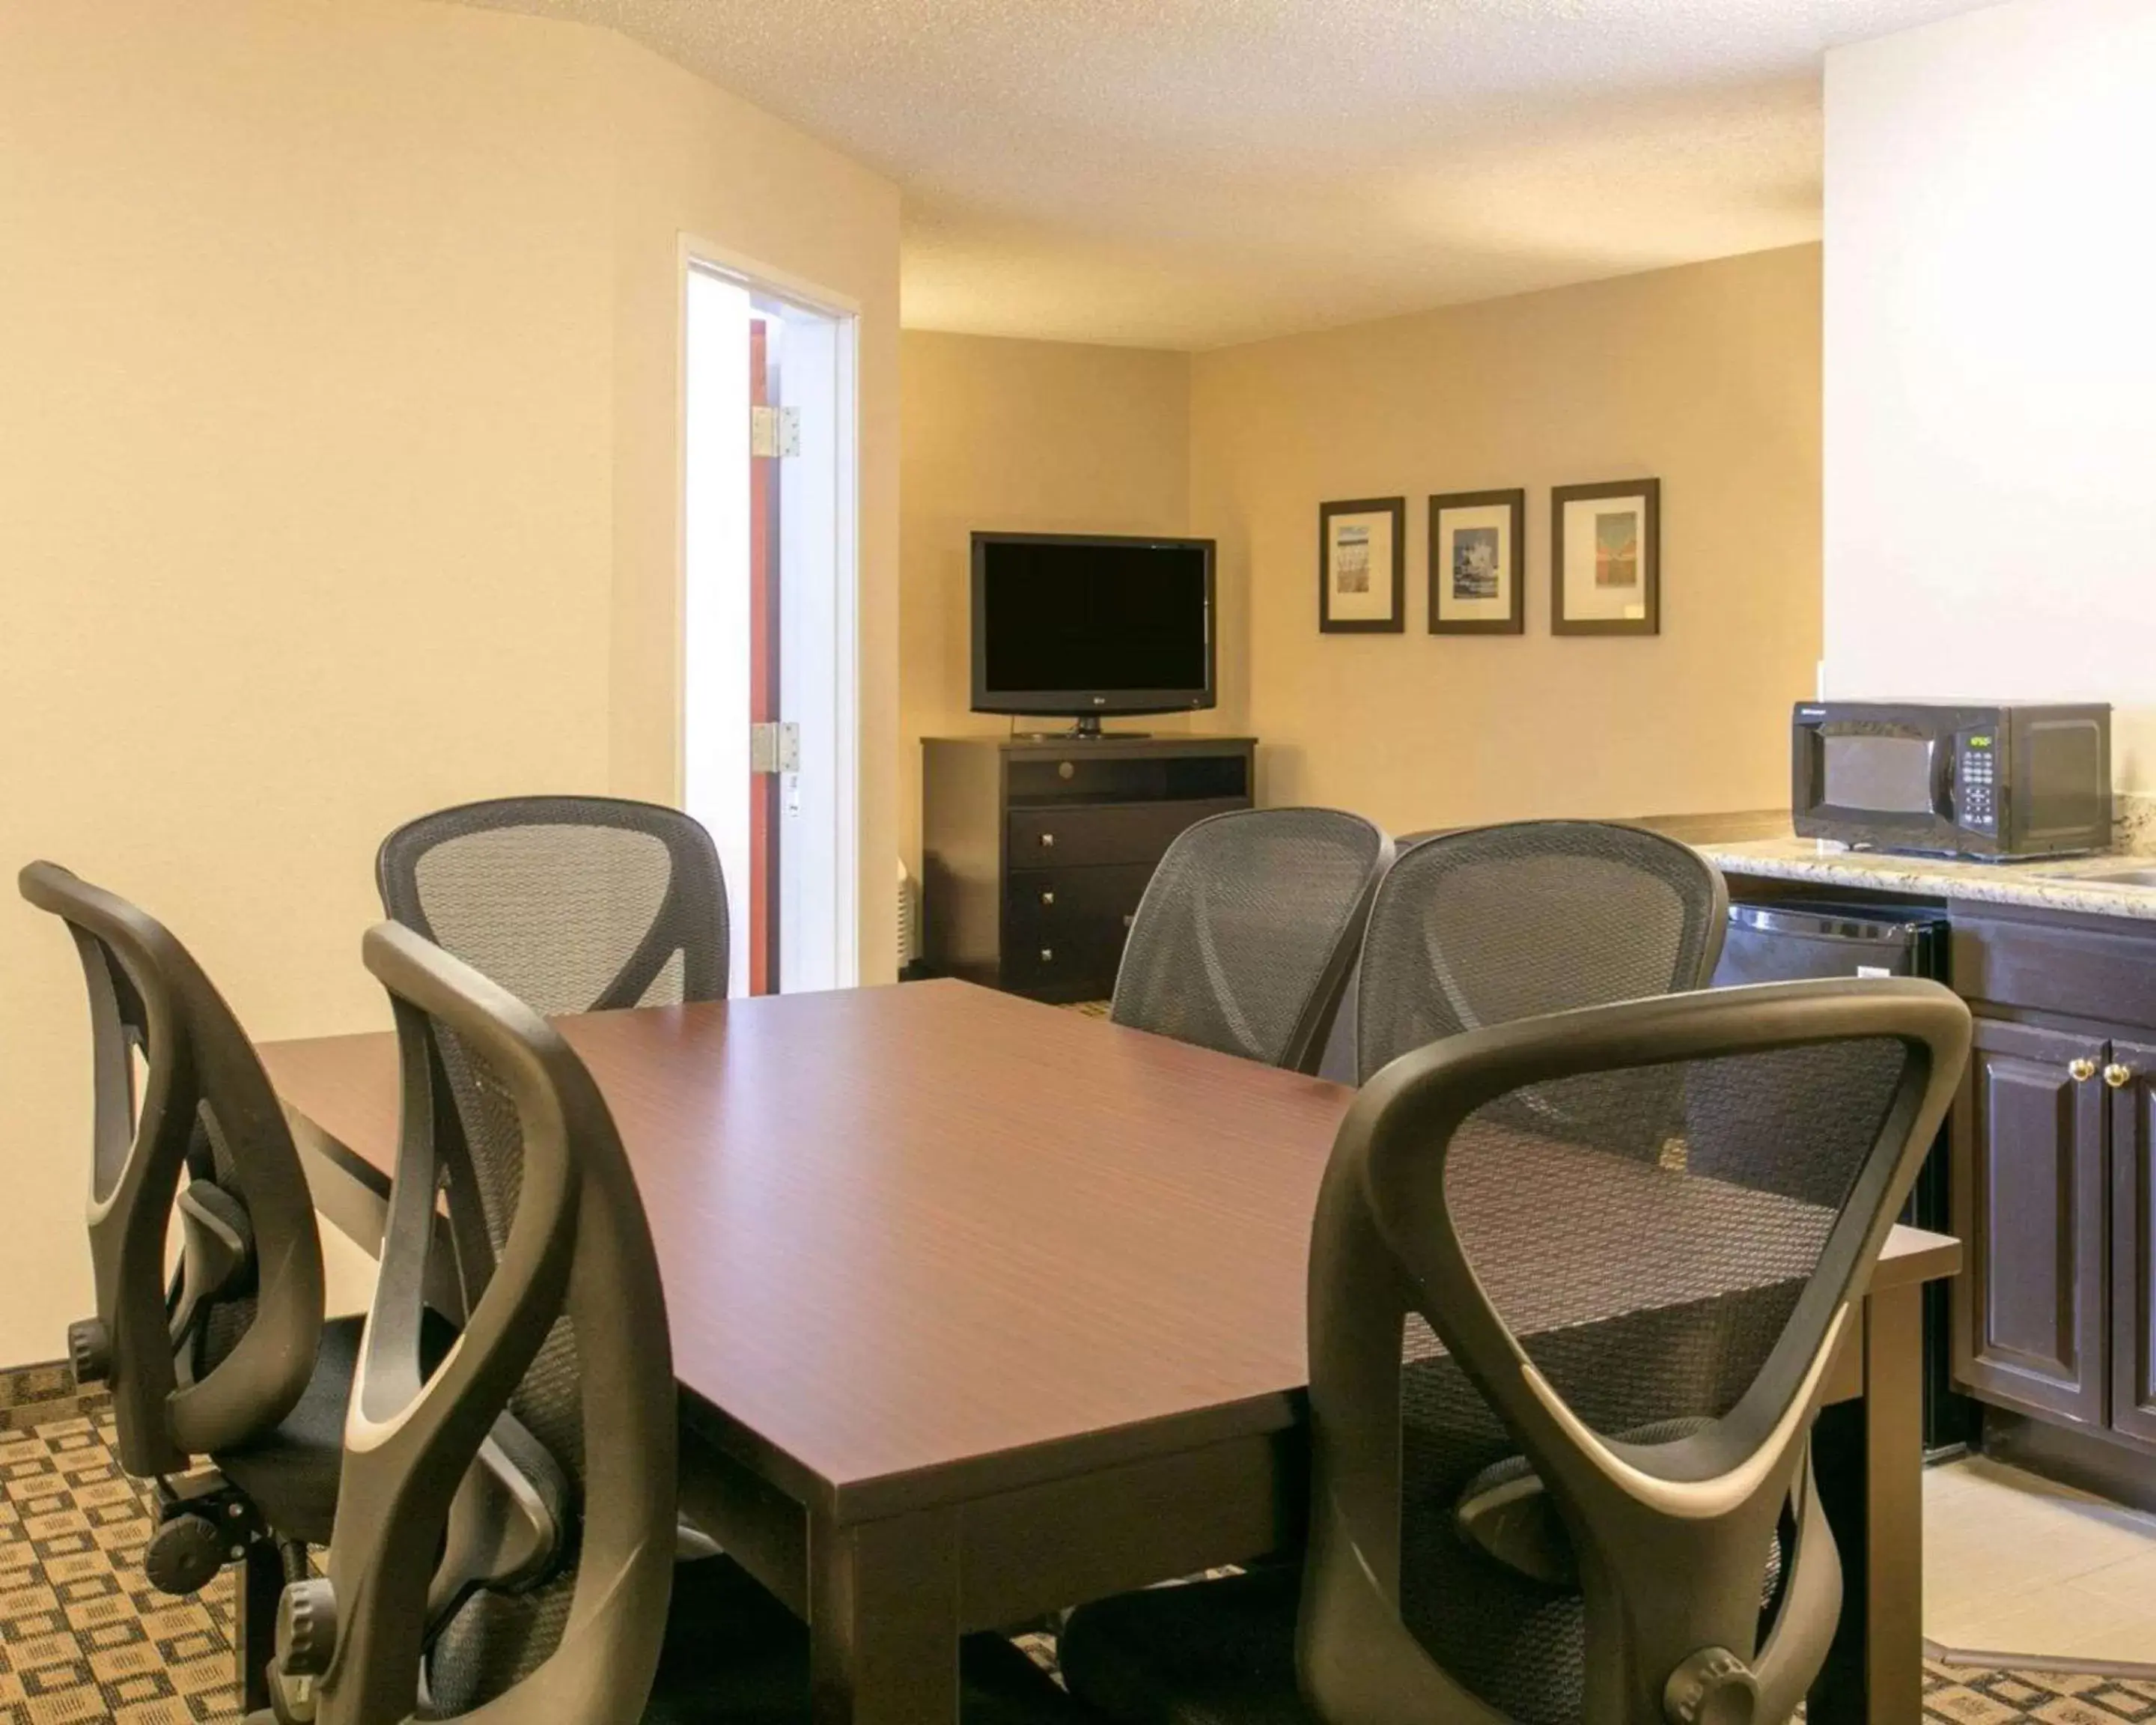 Photo of the whole room, Dining Area in Comfort Suites Benton Harbor - St. Joseph